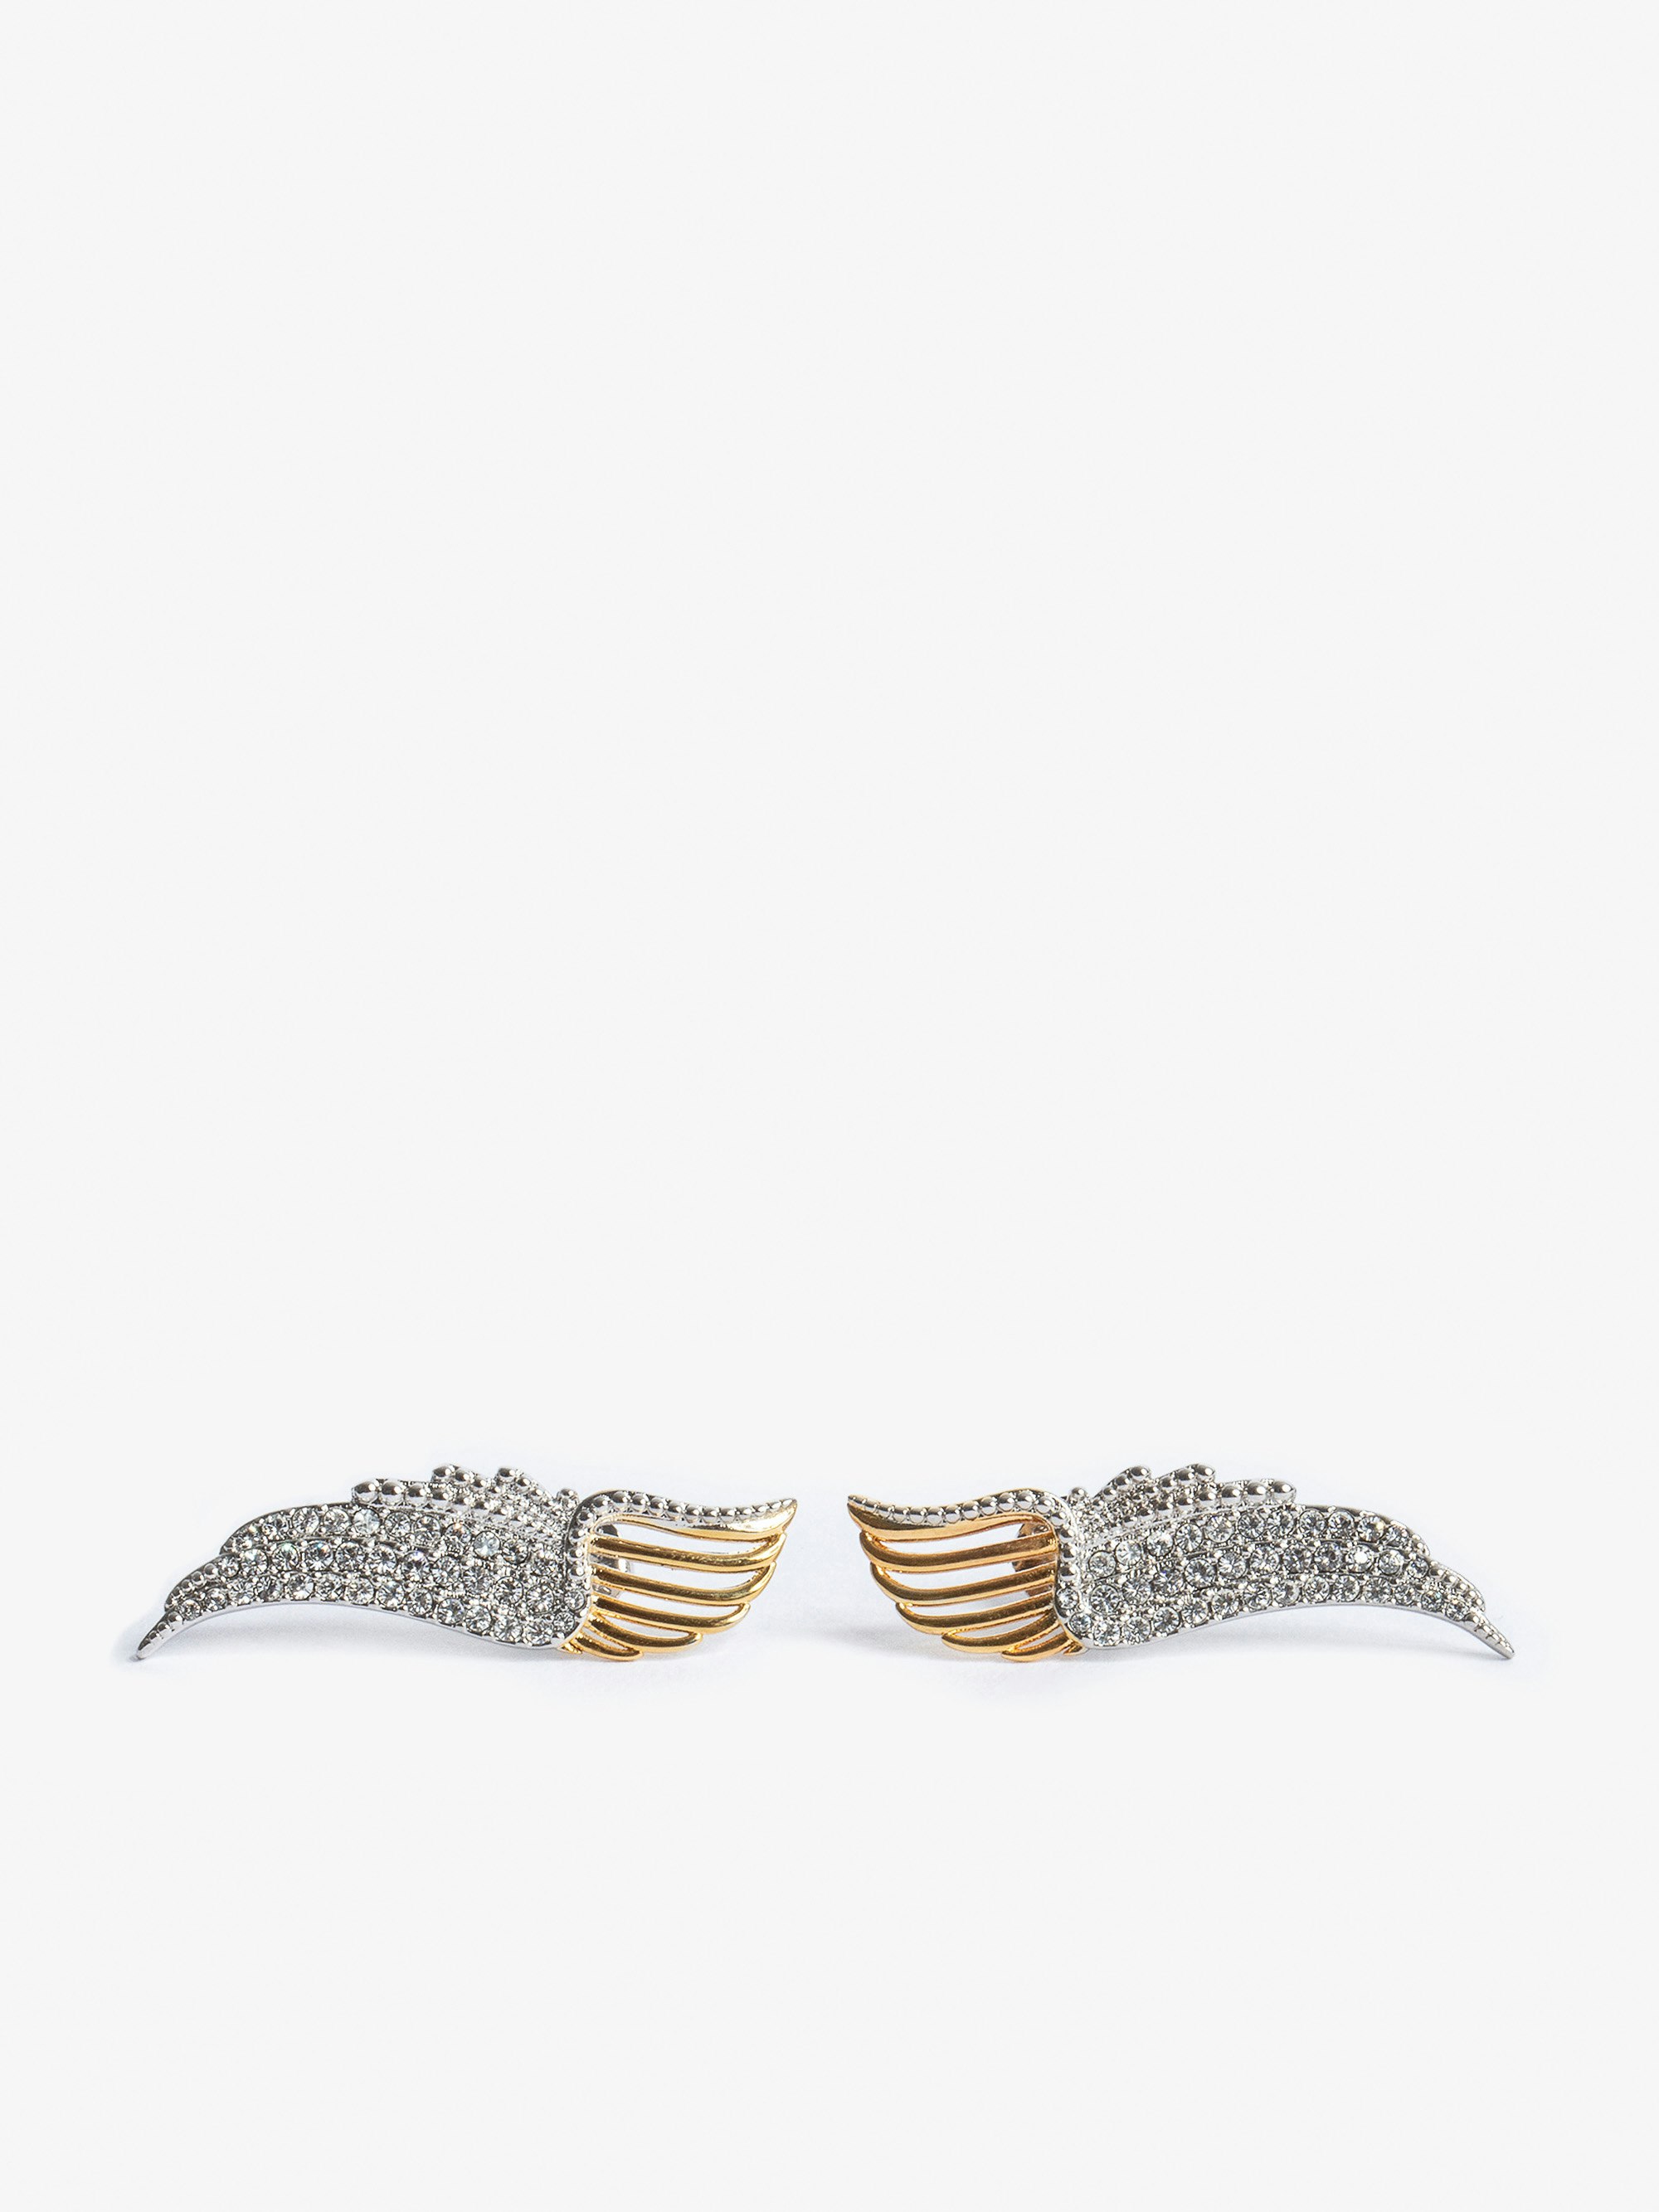 Ohrringe Rock Over - Ohrringe in Flügelform aus goldfarbenem, mit Kristallen besetztem Metall.